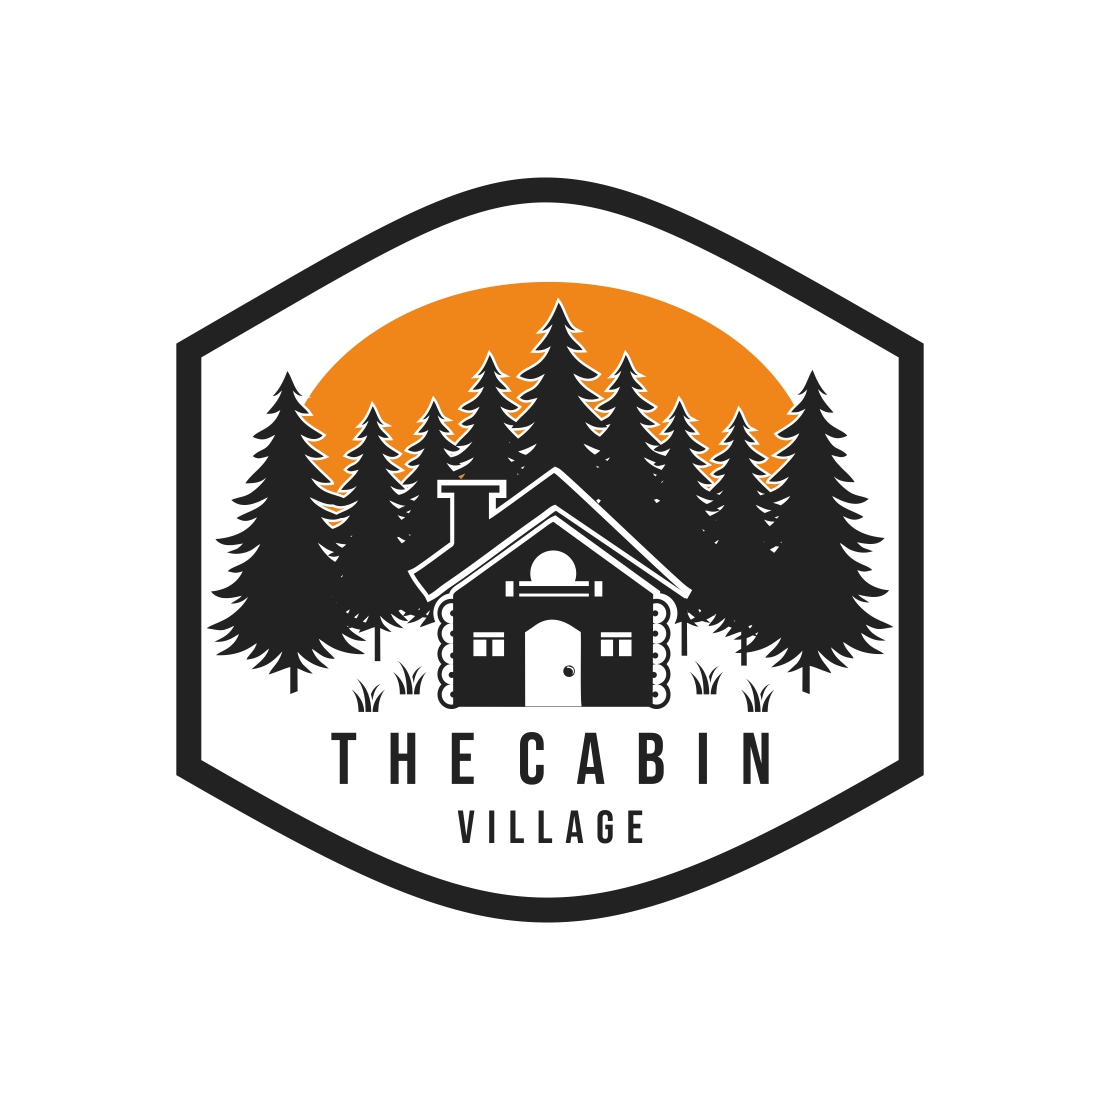 Cabin village logo vector lodge house illustration preview image.